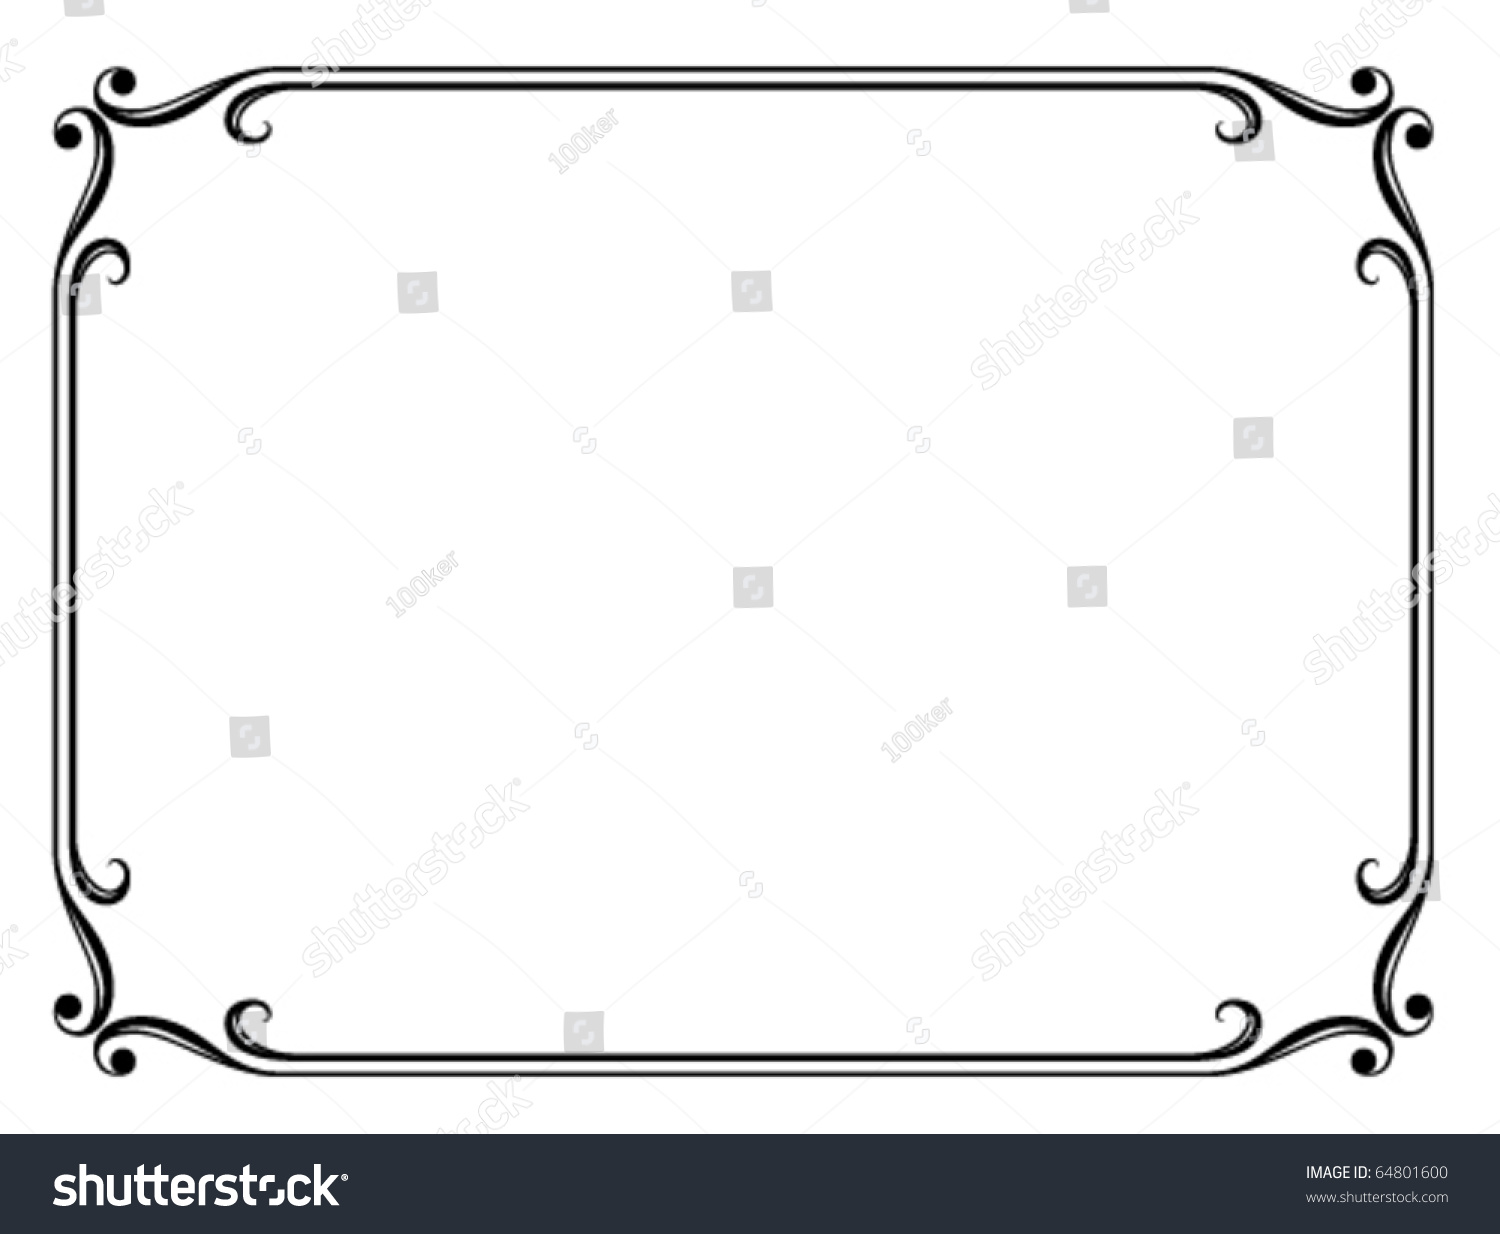 Vector Simple Black Ornamental Decorative Frame - 64801600 : Shutterstock